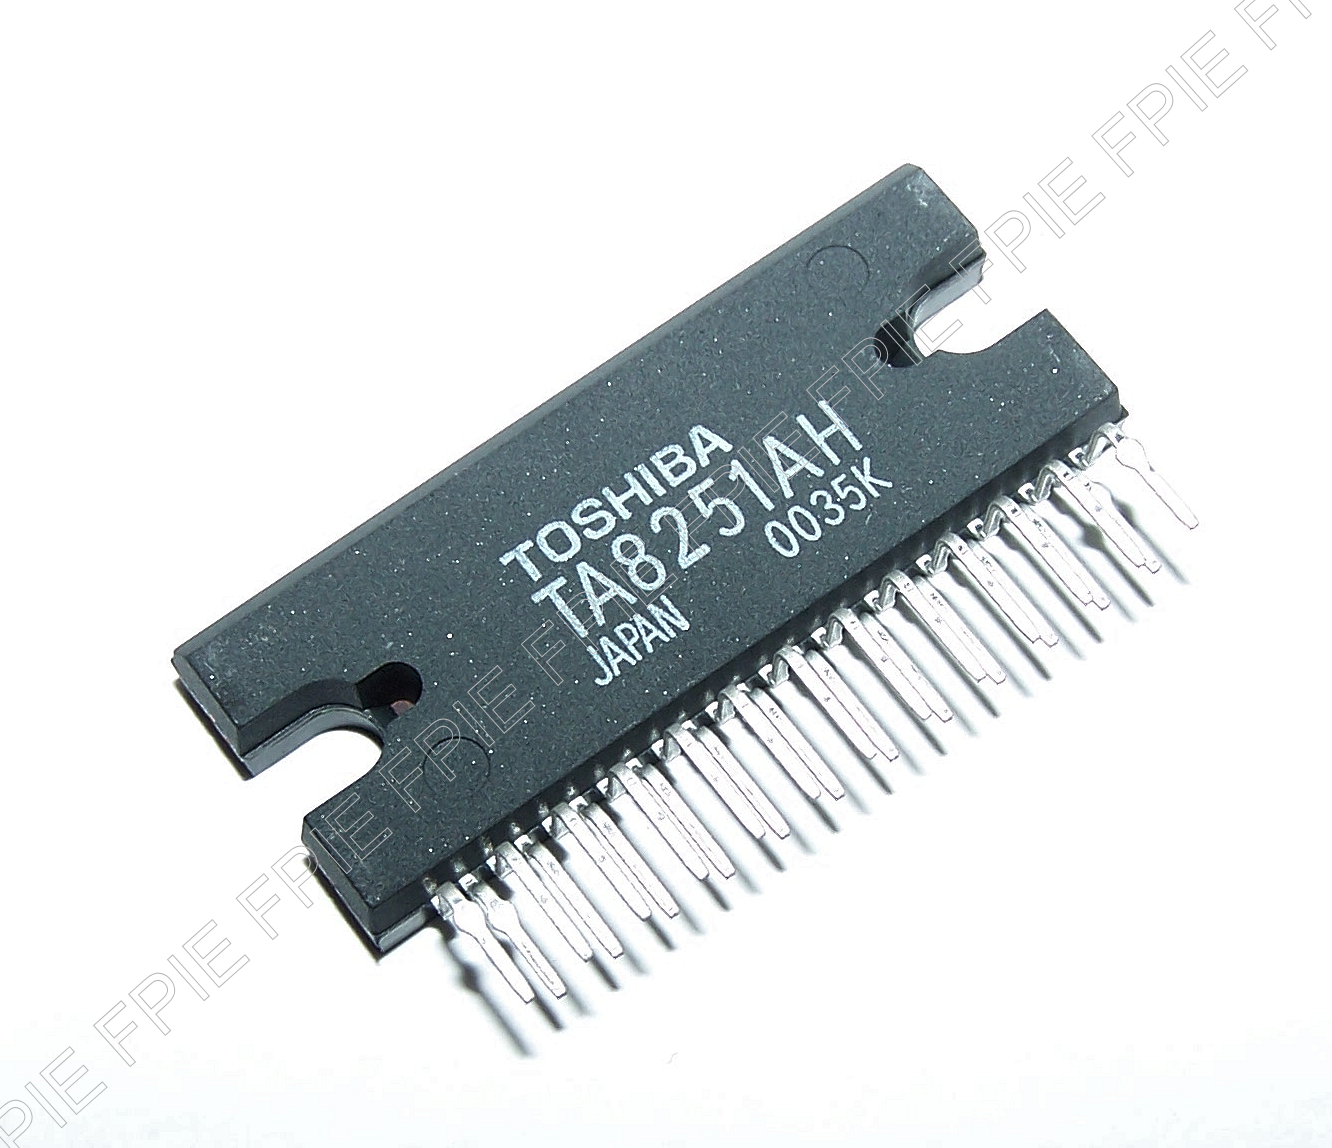 TA8251AH 4ch x 18W Audio Amp by Toshiba